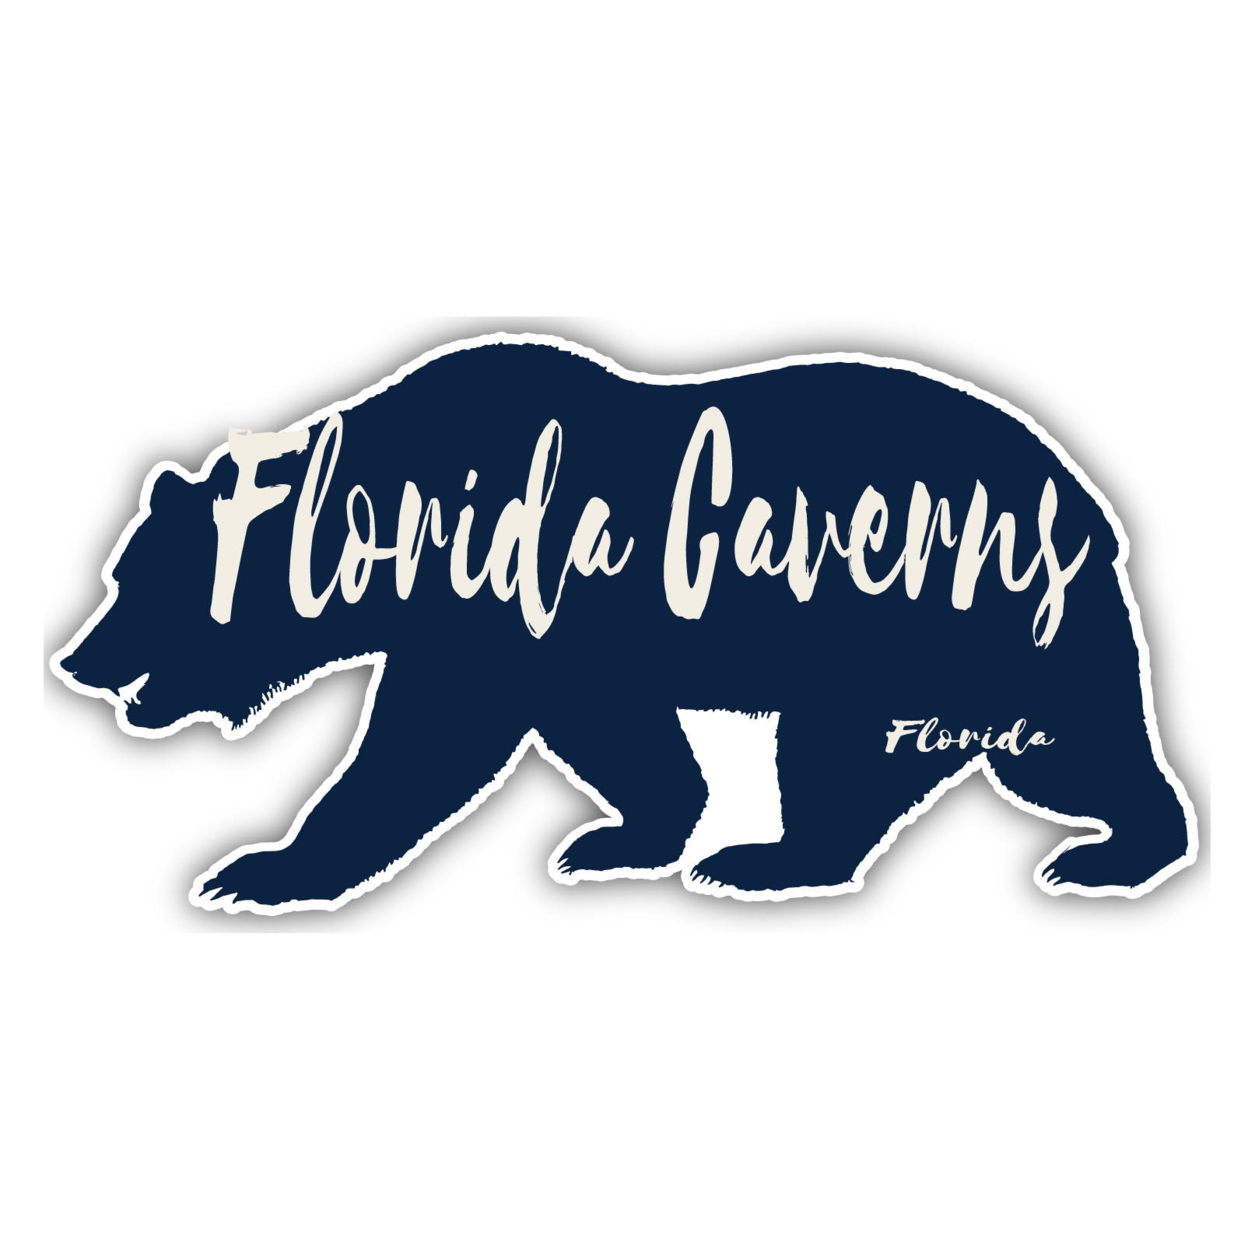 Florida Caverns Florida Souvenir Decorative Stickers (Choose Theme And Size) - 4-Pack, 4-Inch, Bear